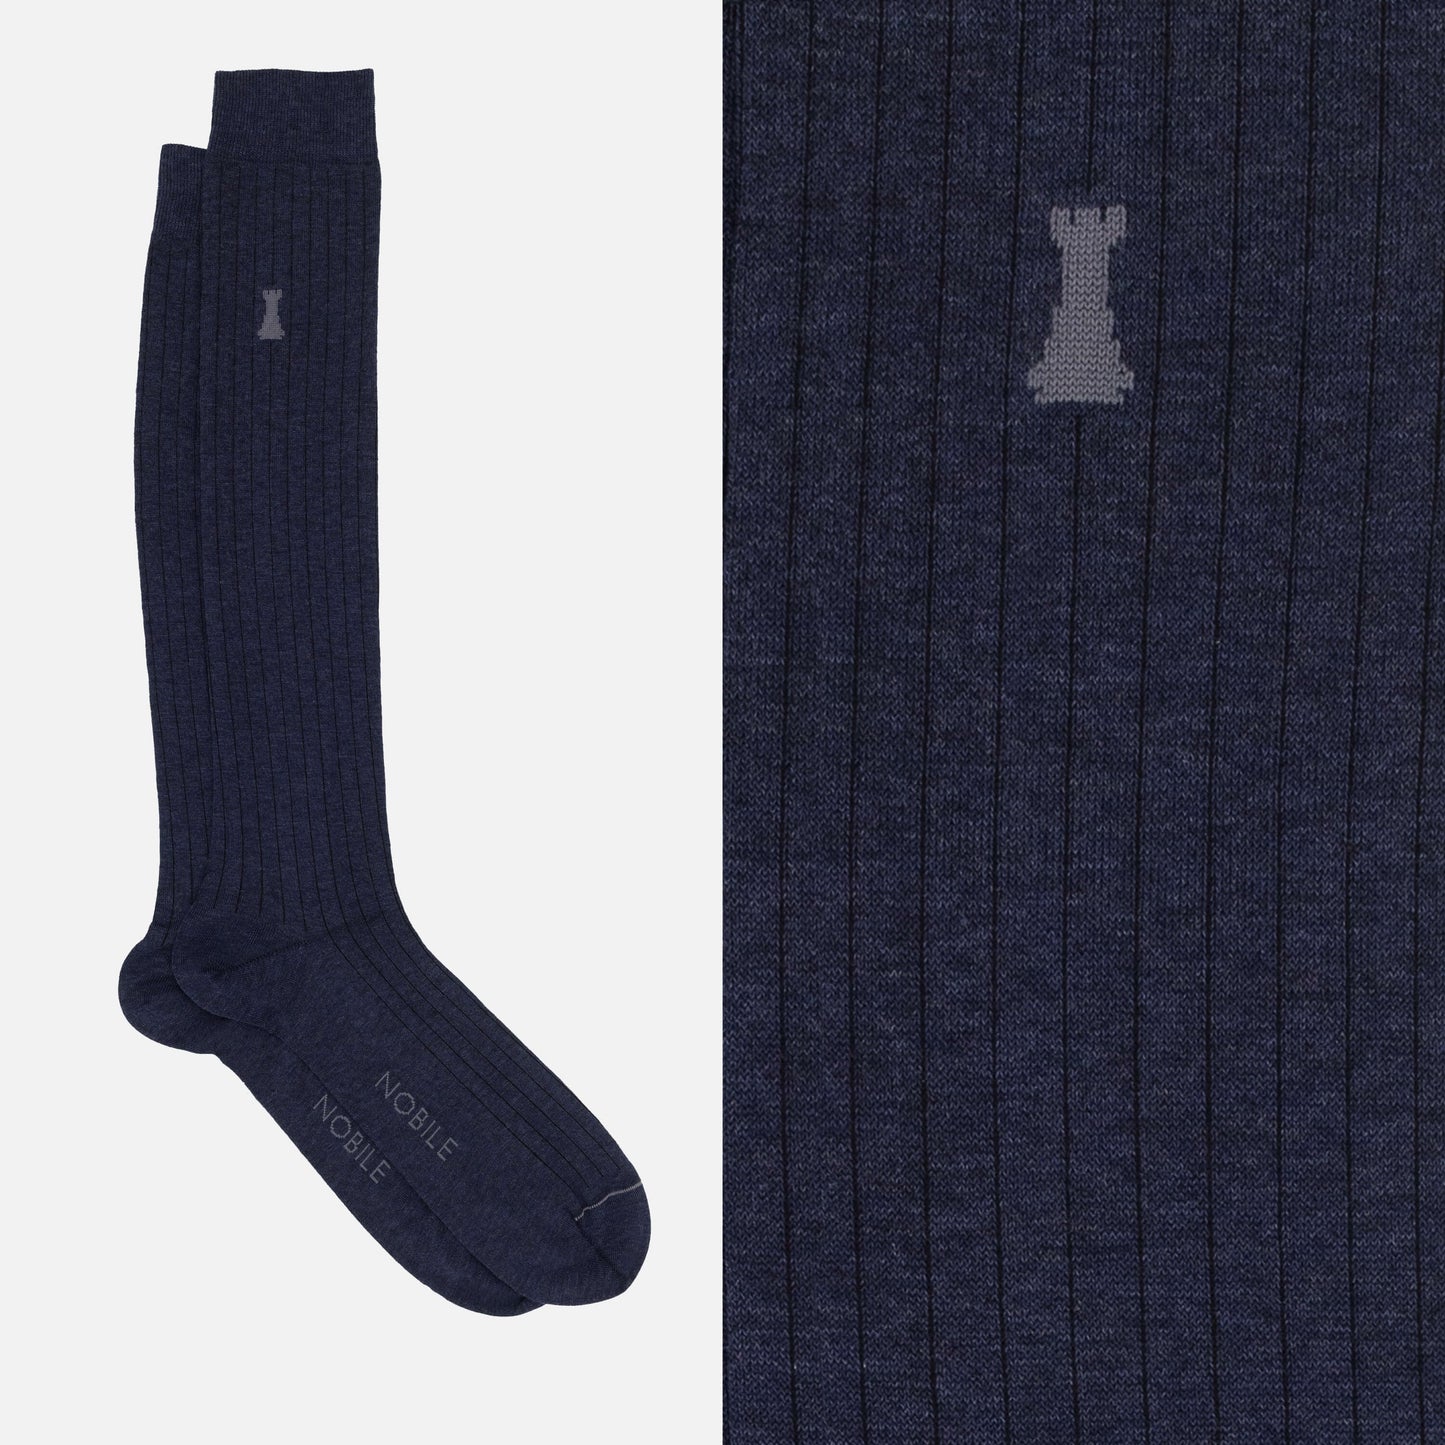 Mèlange - Box of 6 knee high socks